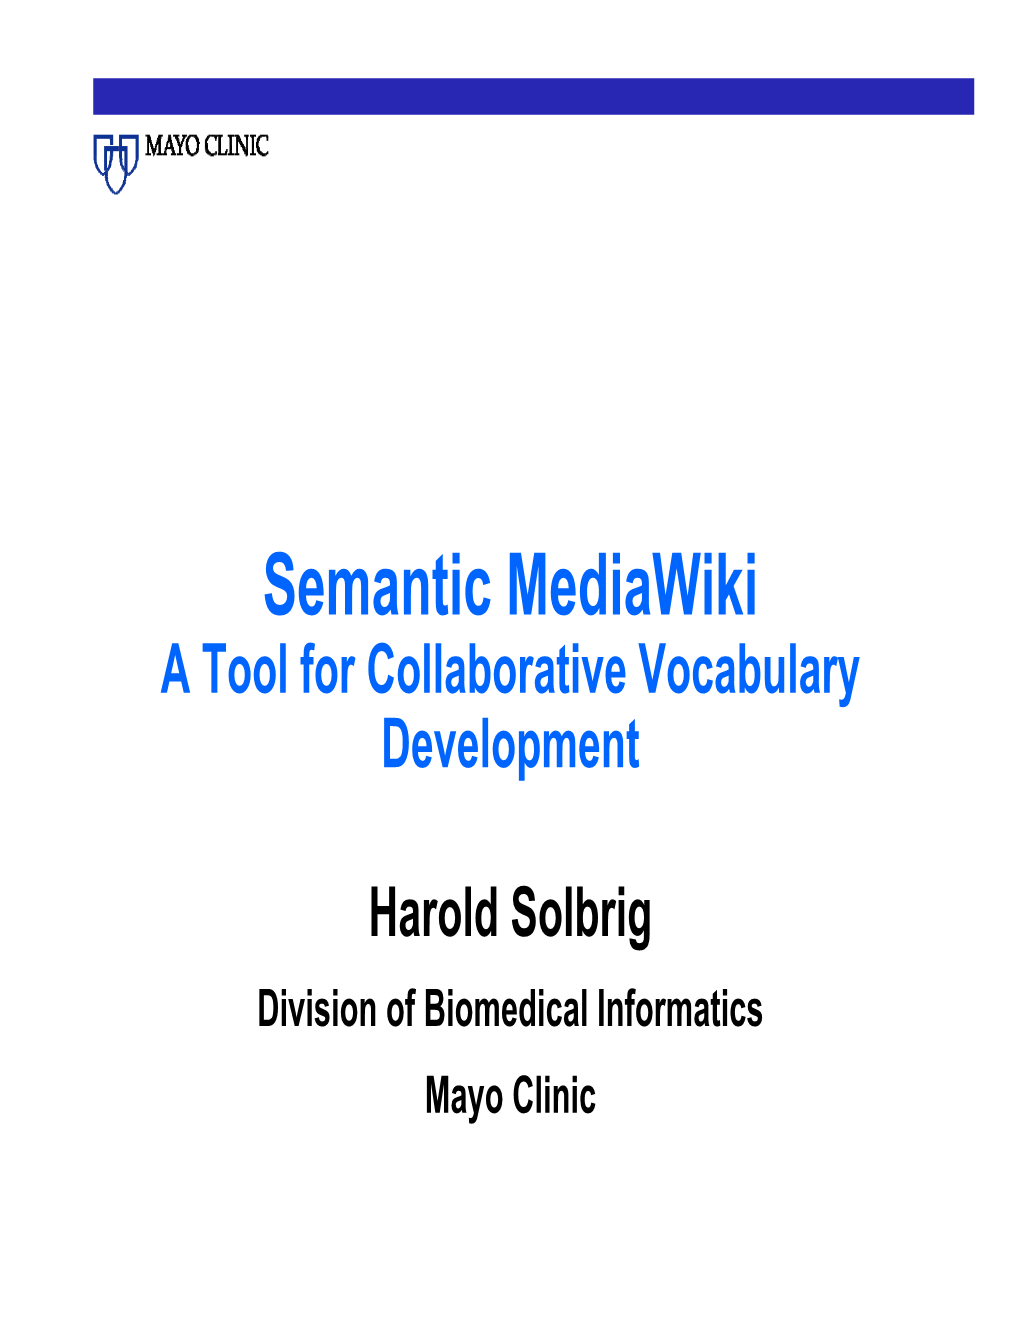 Semantic Mediawiki a Tool for Collaborative Vocabulary Development